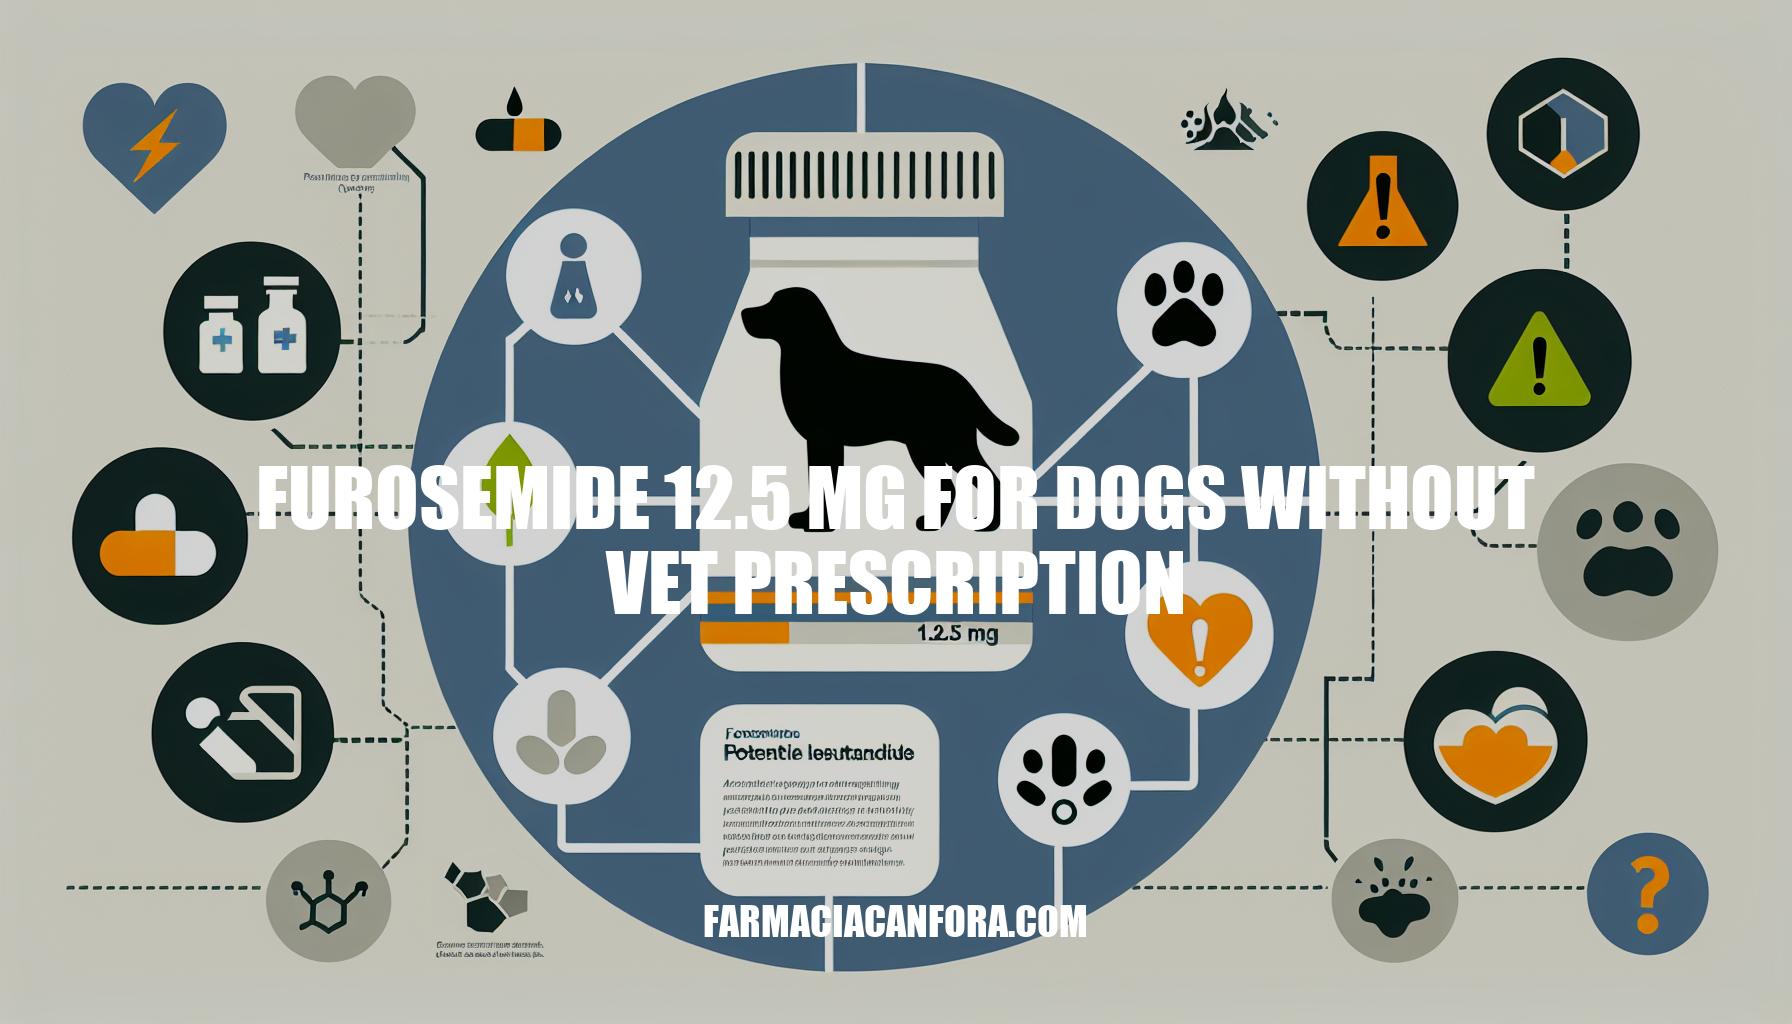 Furosemide 12.5 mg for Dogs Without Vet Prescription: Risks and Alternatives